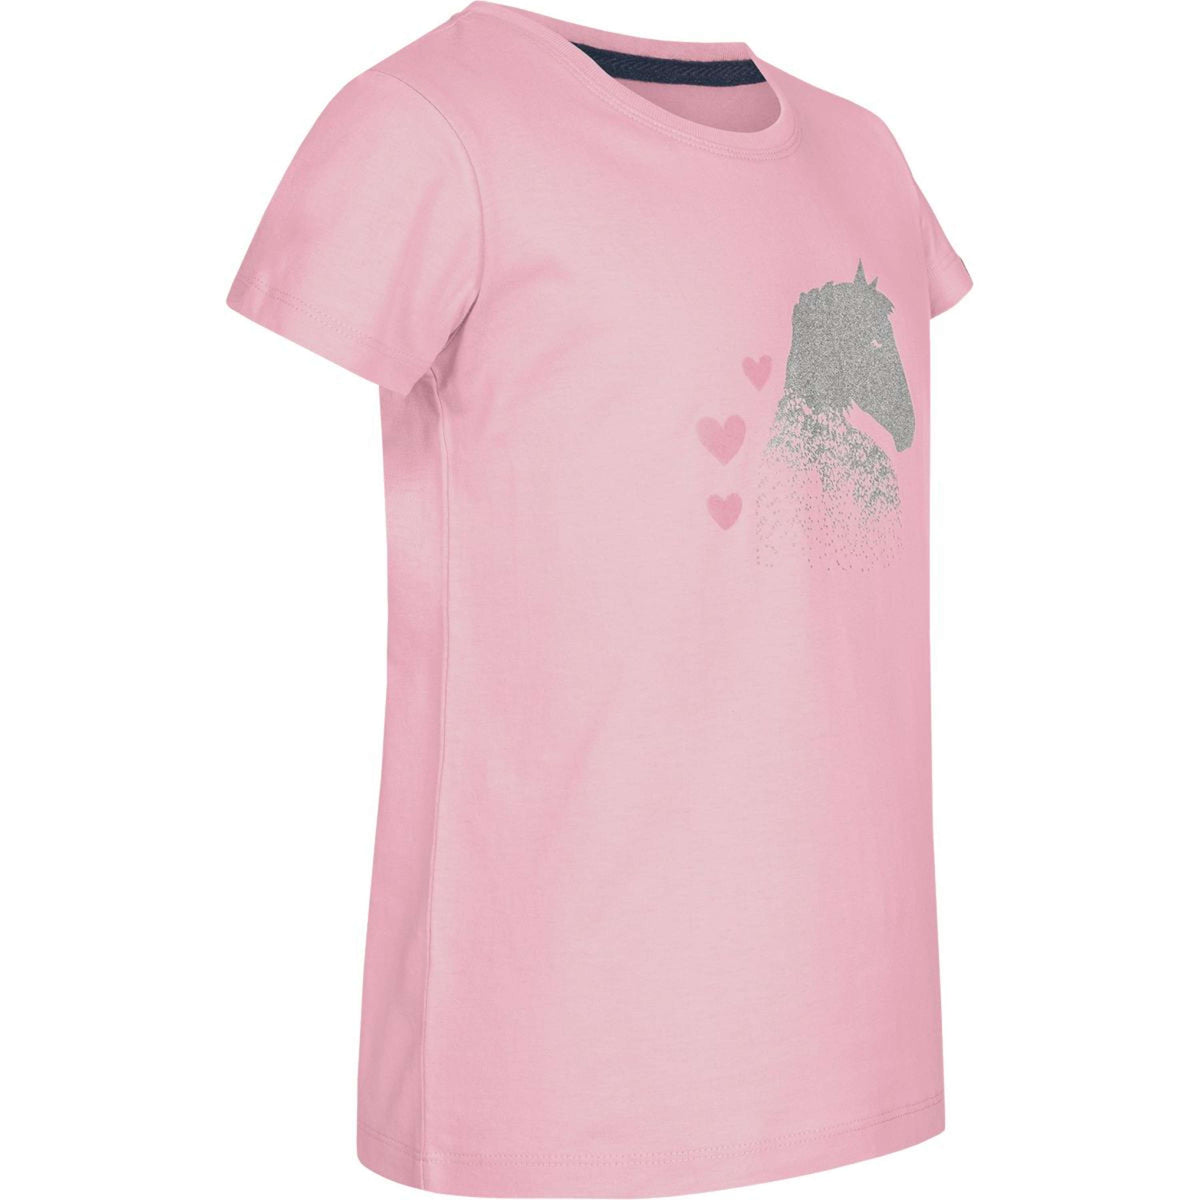 ELT T-shirt Lucky Gabi Cherry Blossom